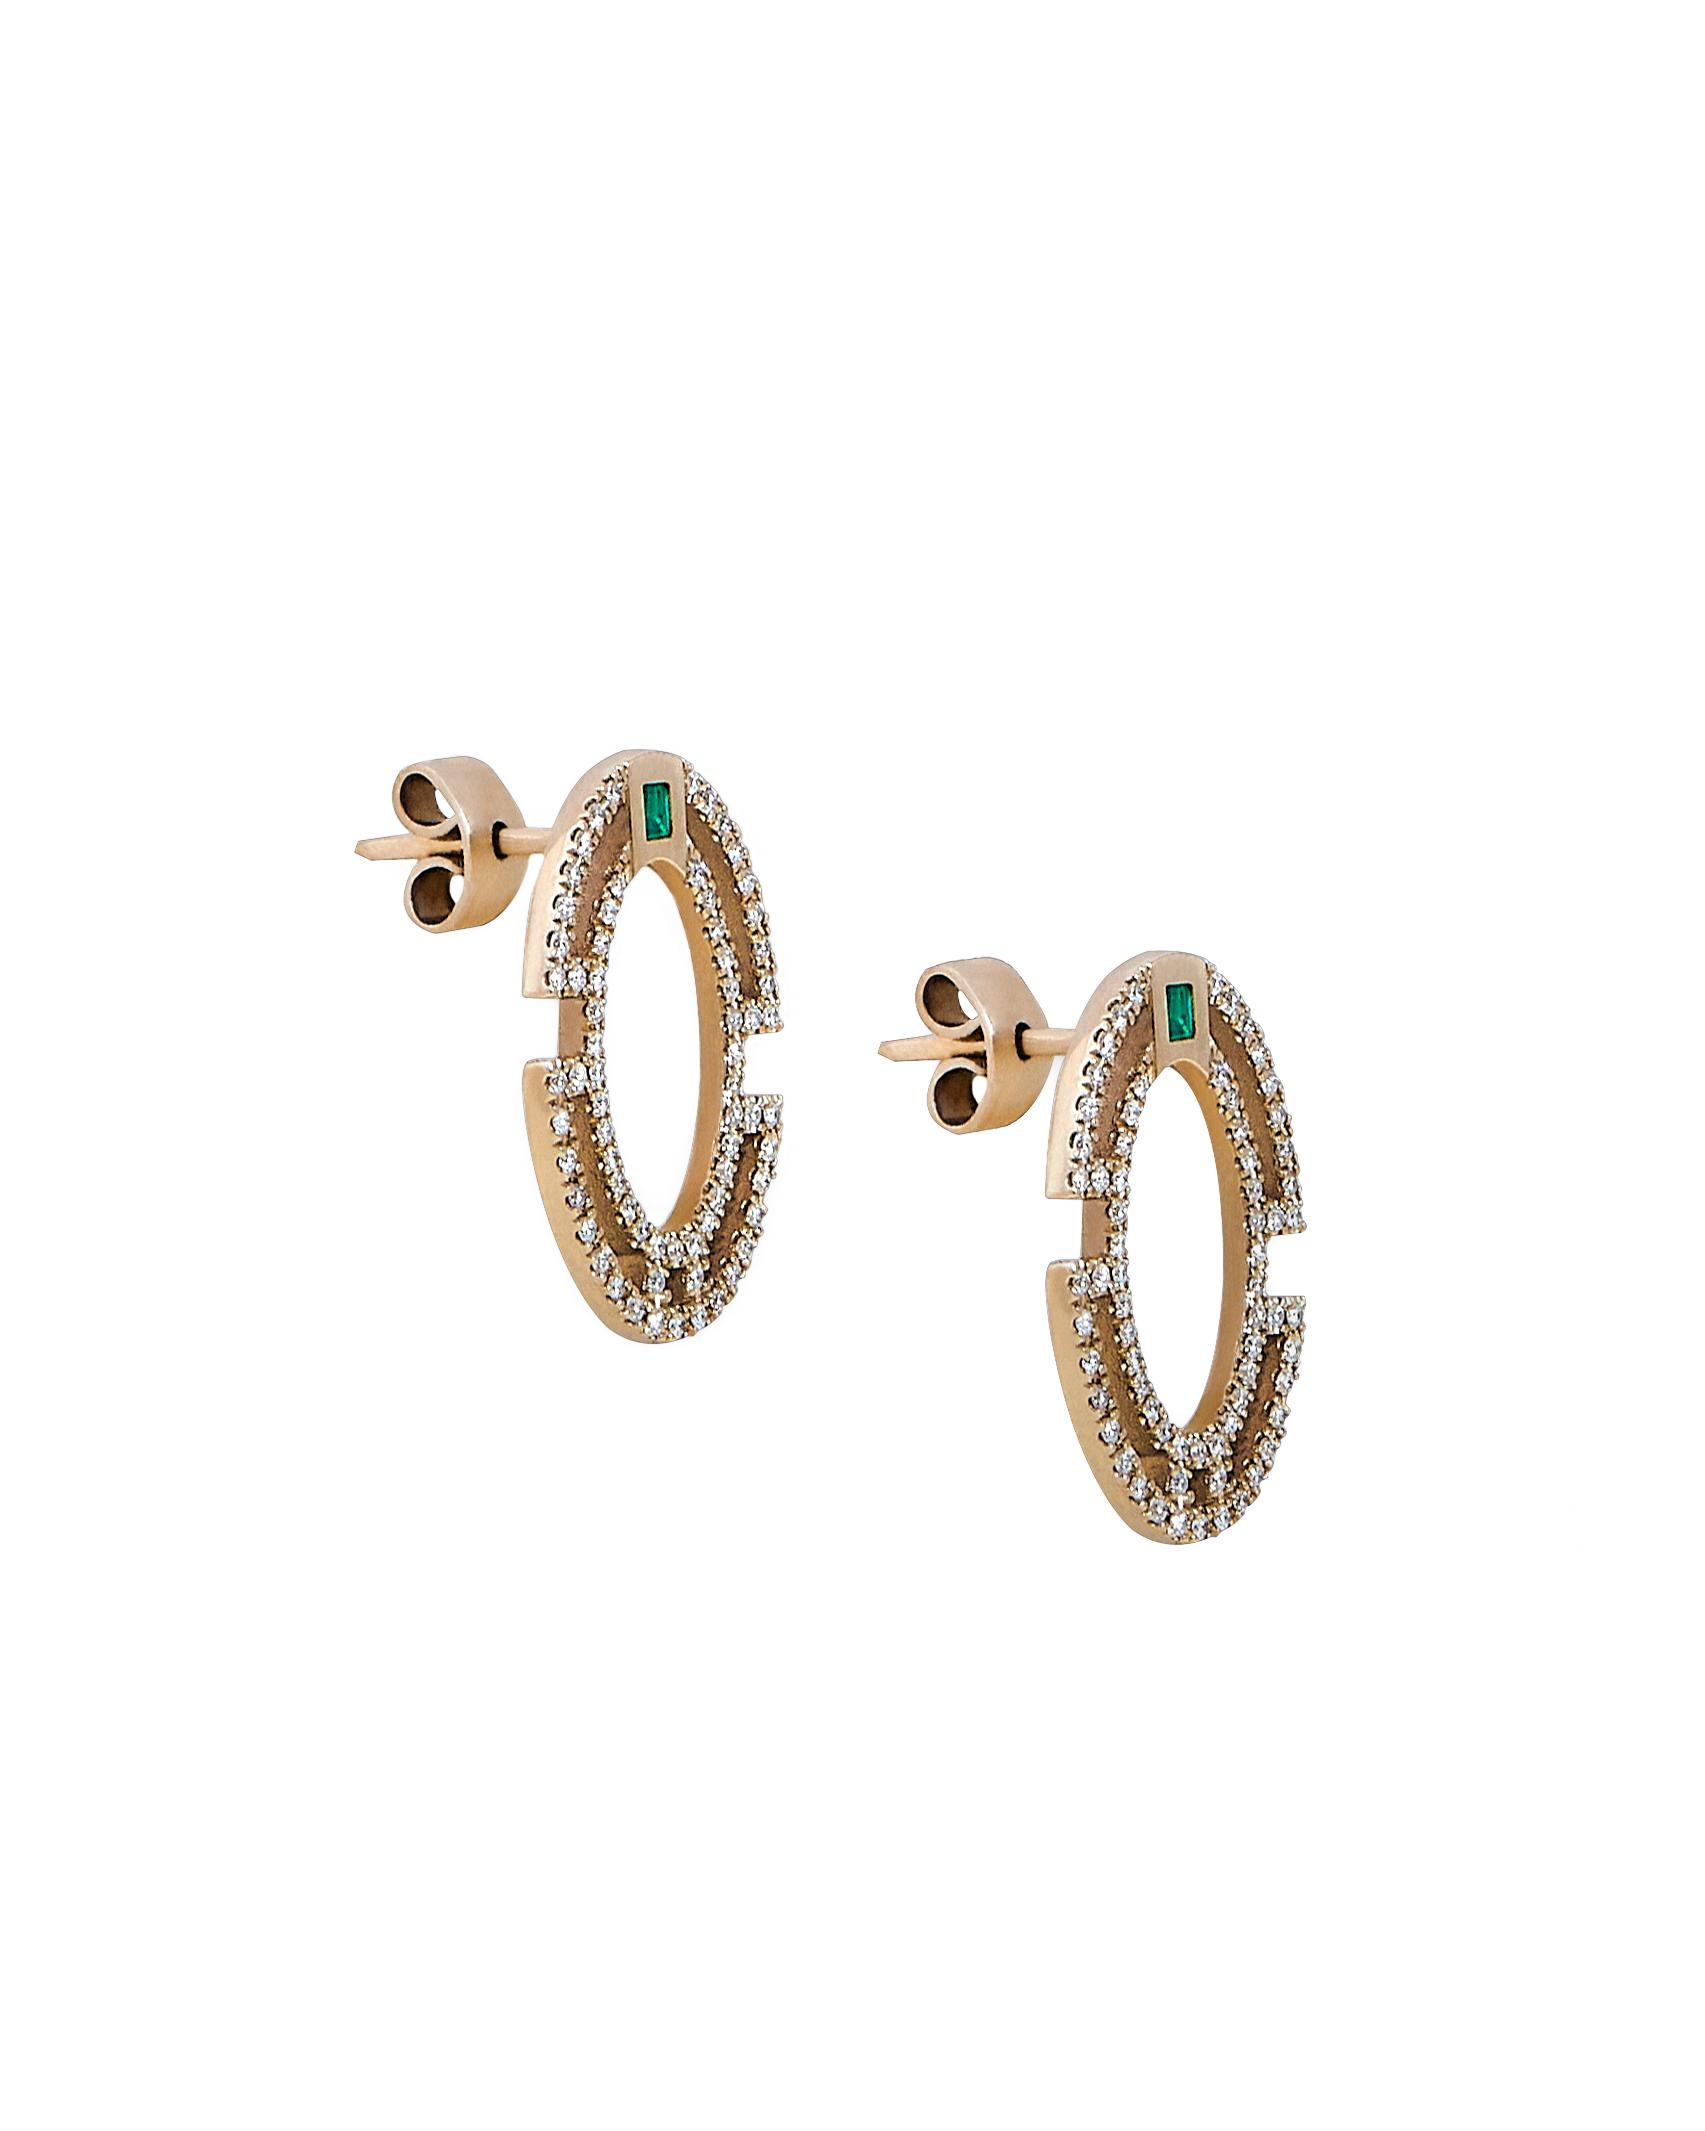 Brilliant Cut Polina Ellis White Diamonds & Emeralds 18k Raw White Gold Earrings For Sale